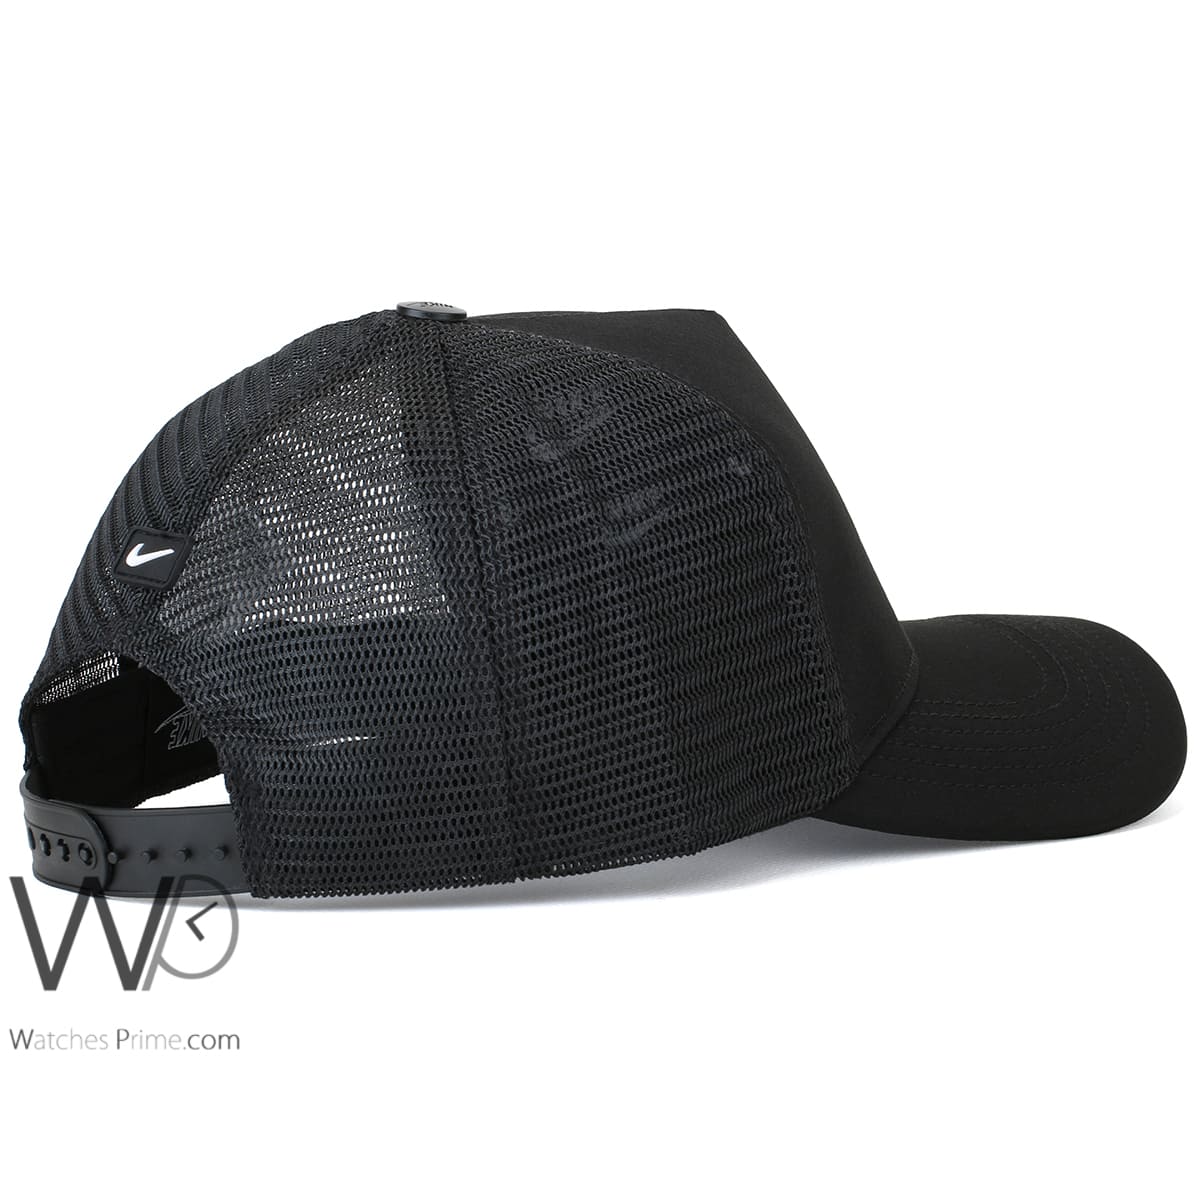 Nike SB Black Mesh hat | Watches Prime